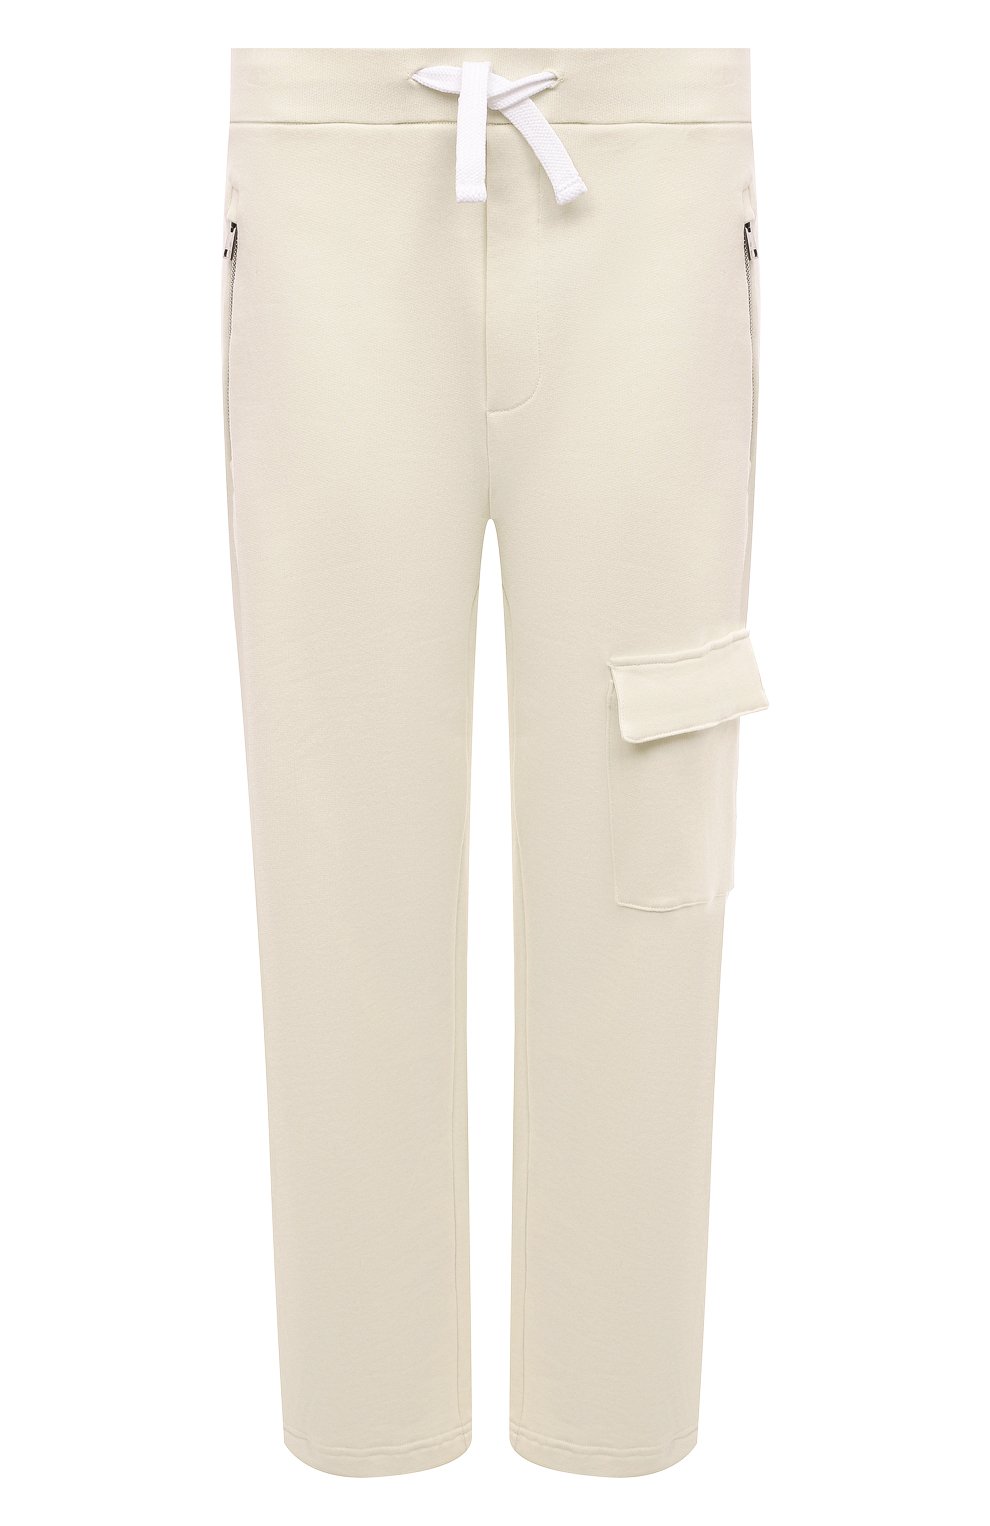 Мужские хлопковые брюки PREMIATA белого цвета, арт. PW23_59PD | Фото 1 (Длина ( брюки, джинсы): Стандартные; Случай: Повседневный; Материал сплава: Проставлено; Материал внешний: Хлопок; Драгоценные камни: Проставлено; Стили: Кэжуэл)